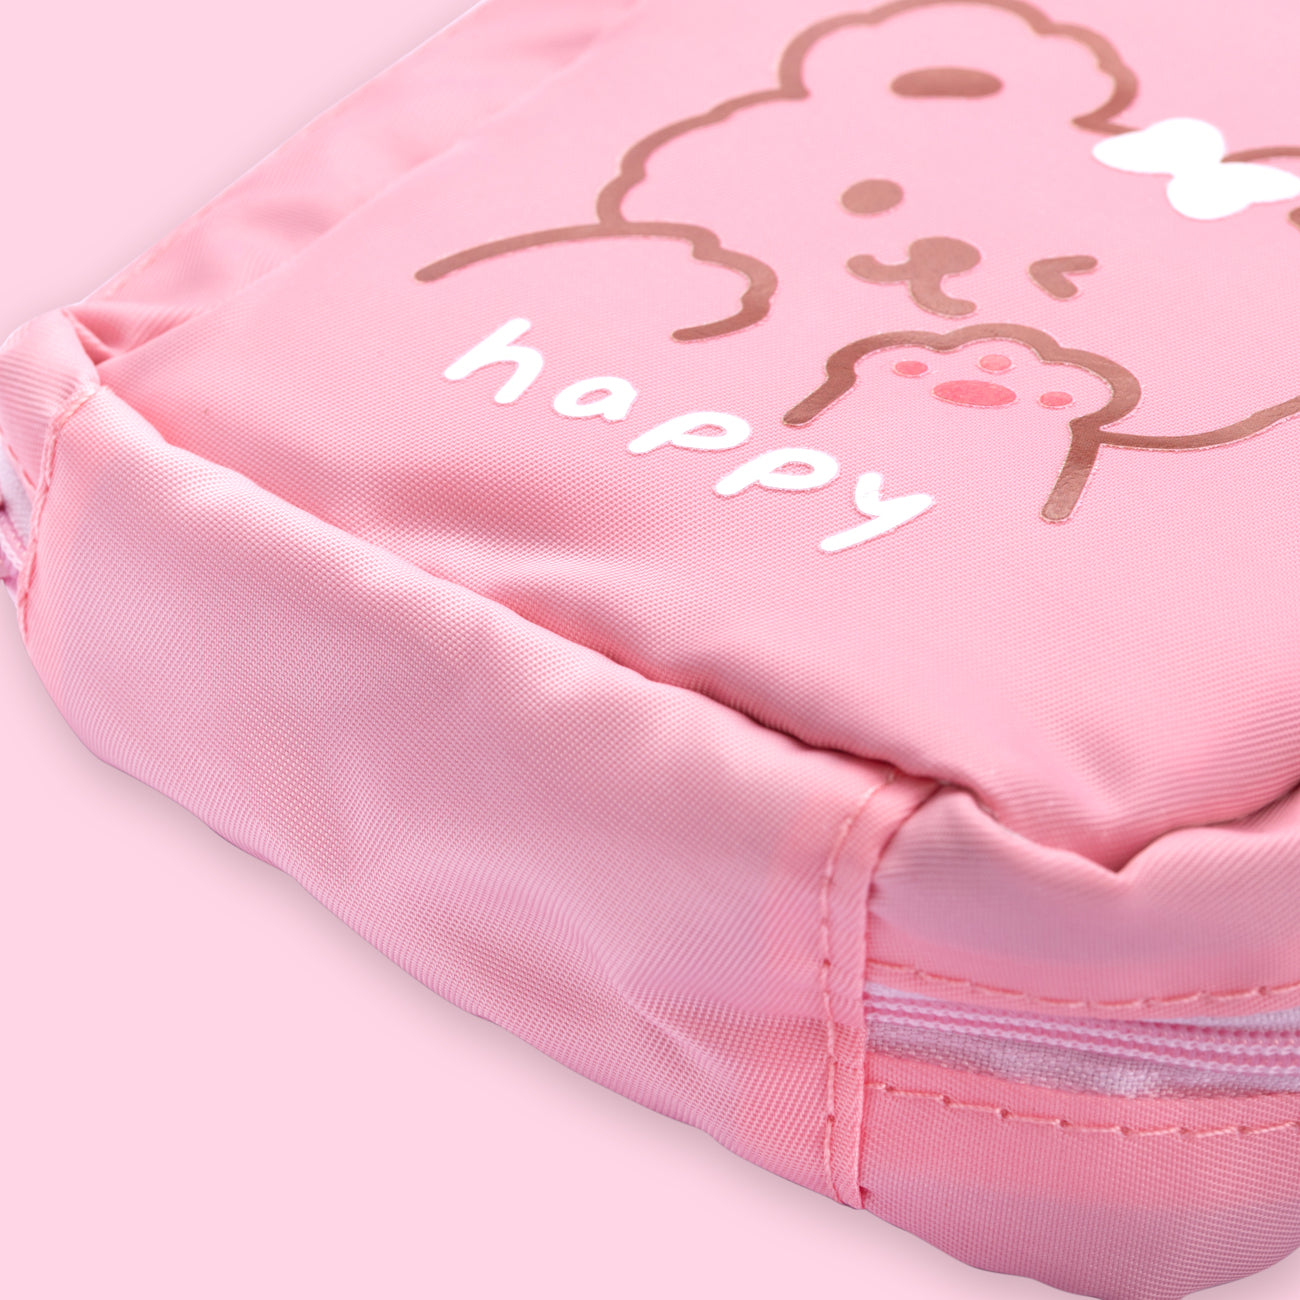 Sanitary Napkin Storage Pouch - Pink Bear - Stationery Pal